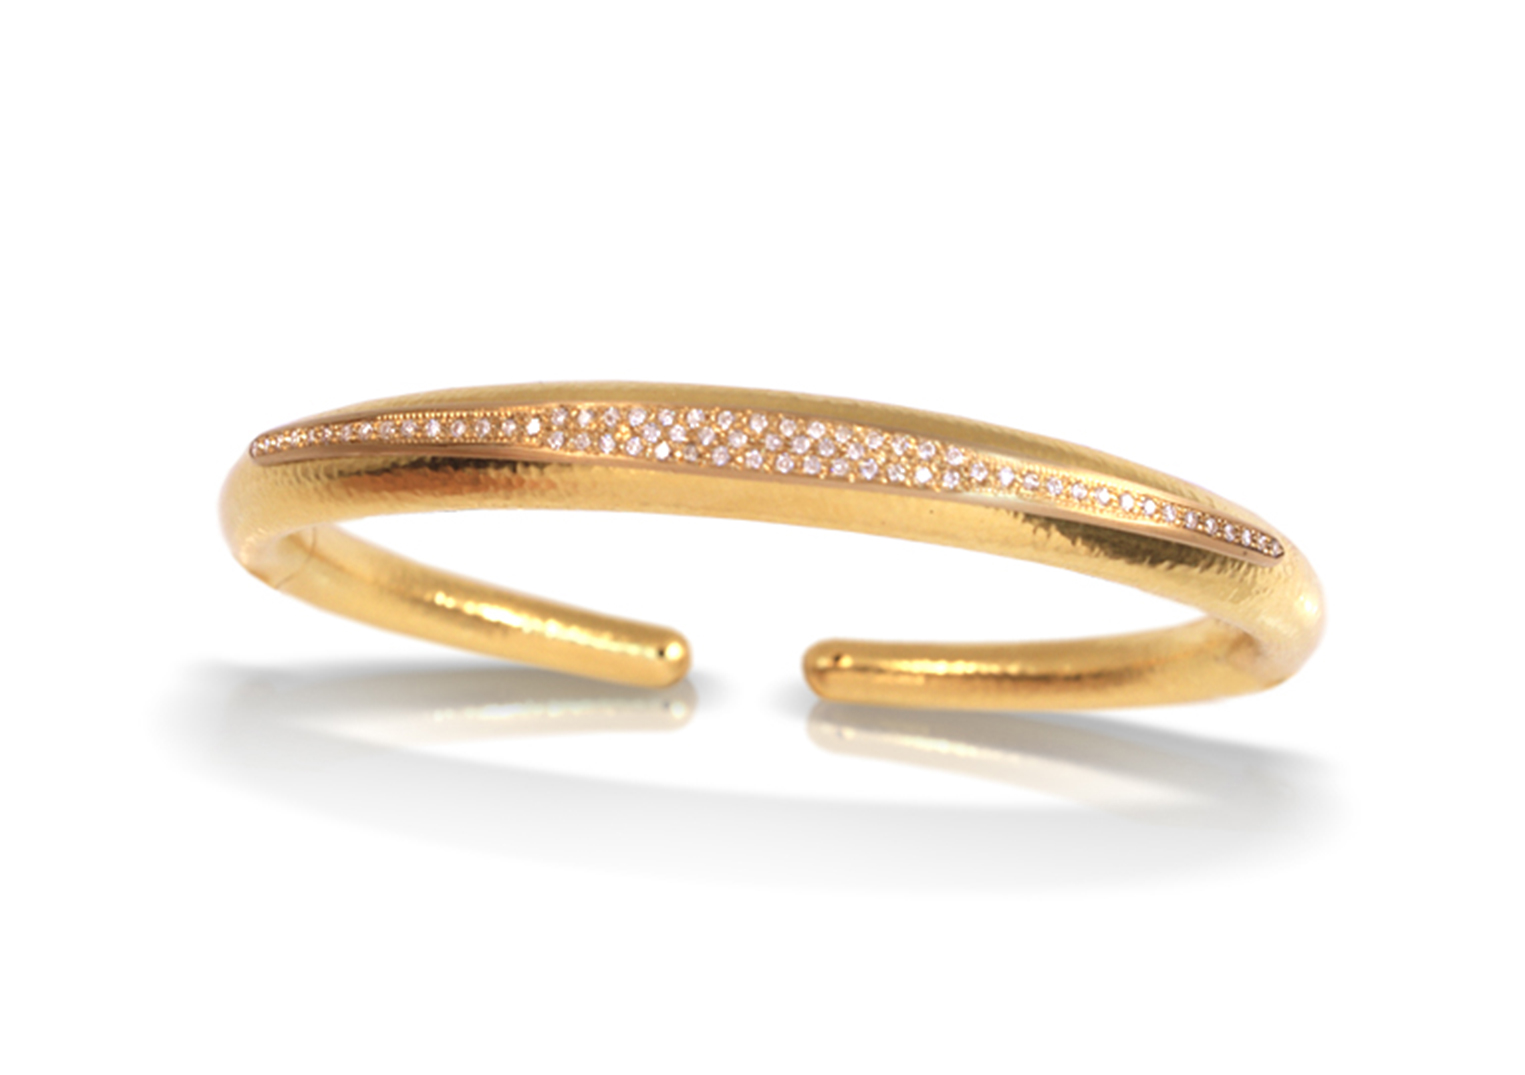 LALAOUNIS bangle bracelet in yellow gold